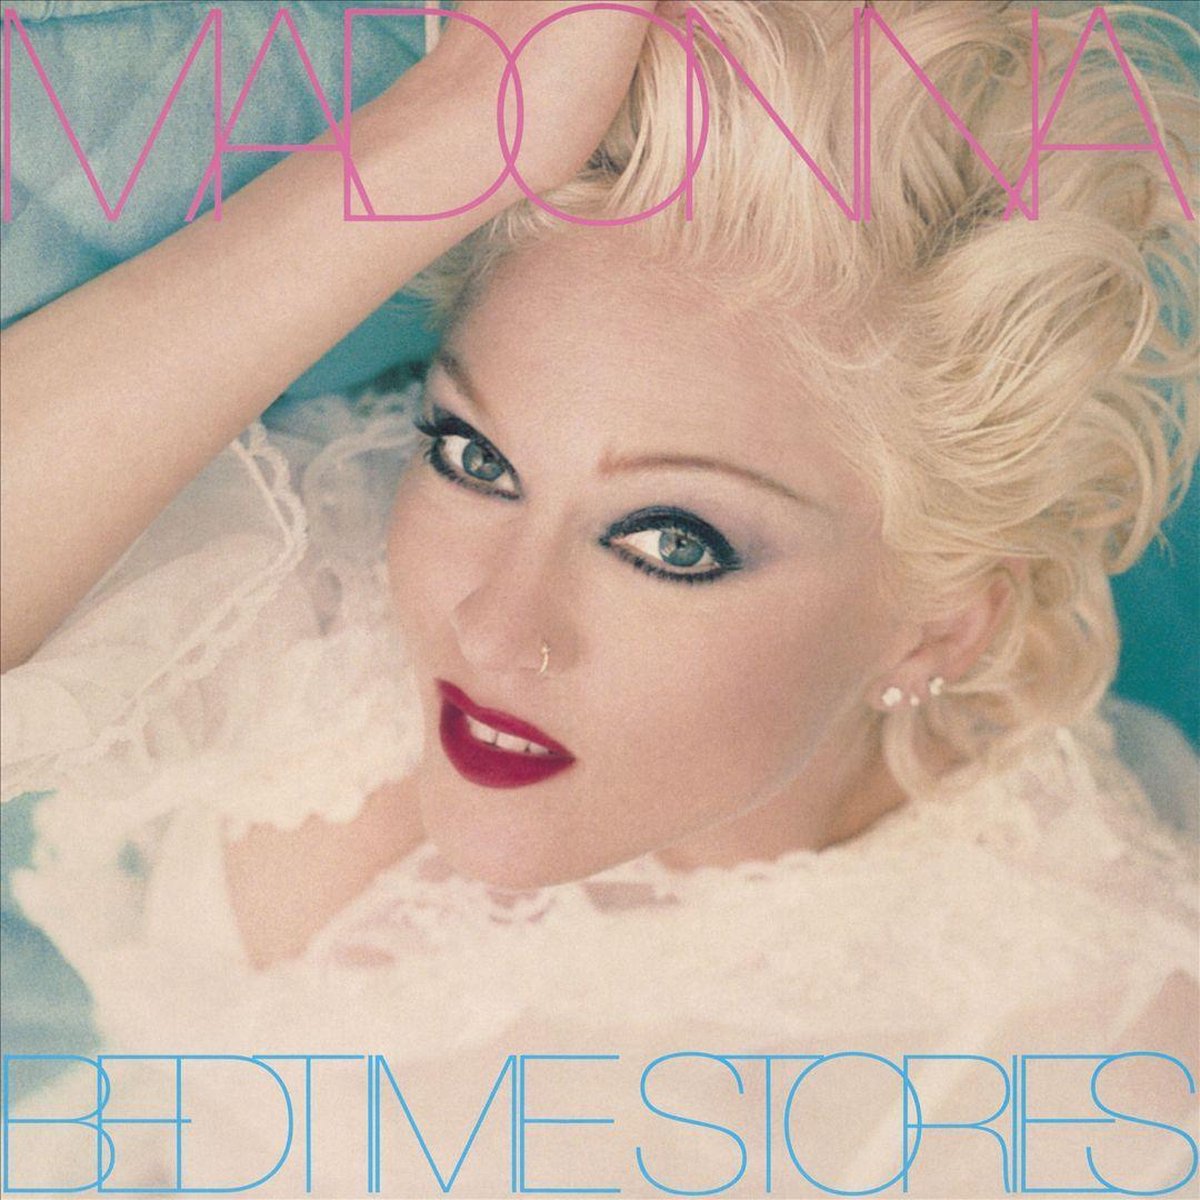 Bedtime Stories (LP) - Madonna